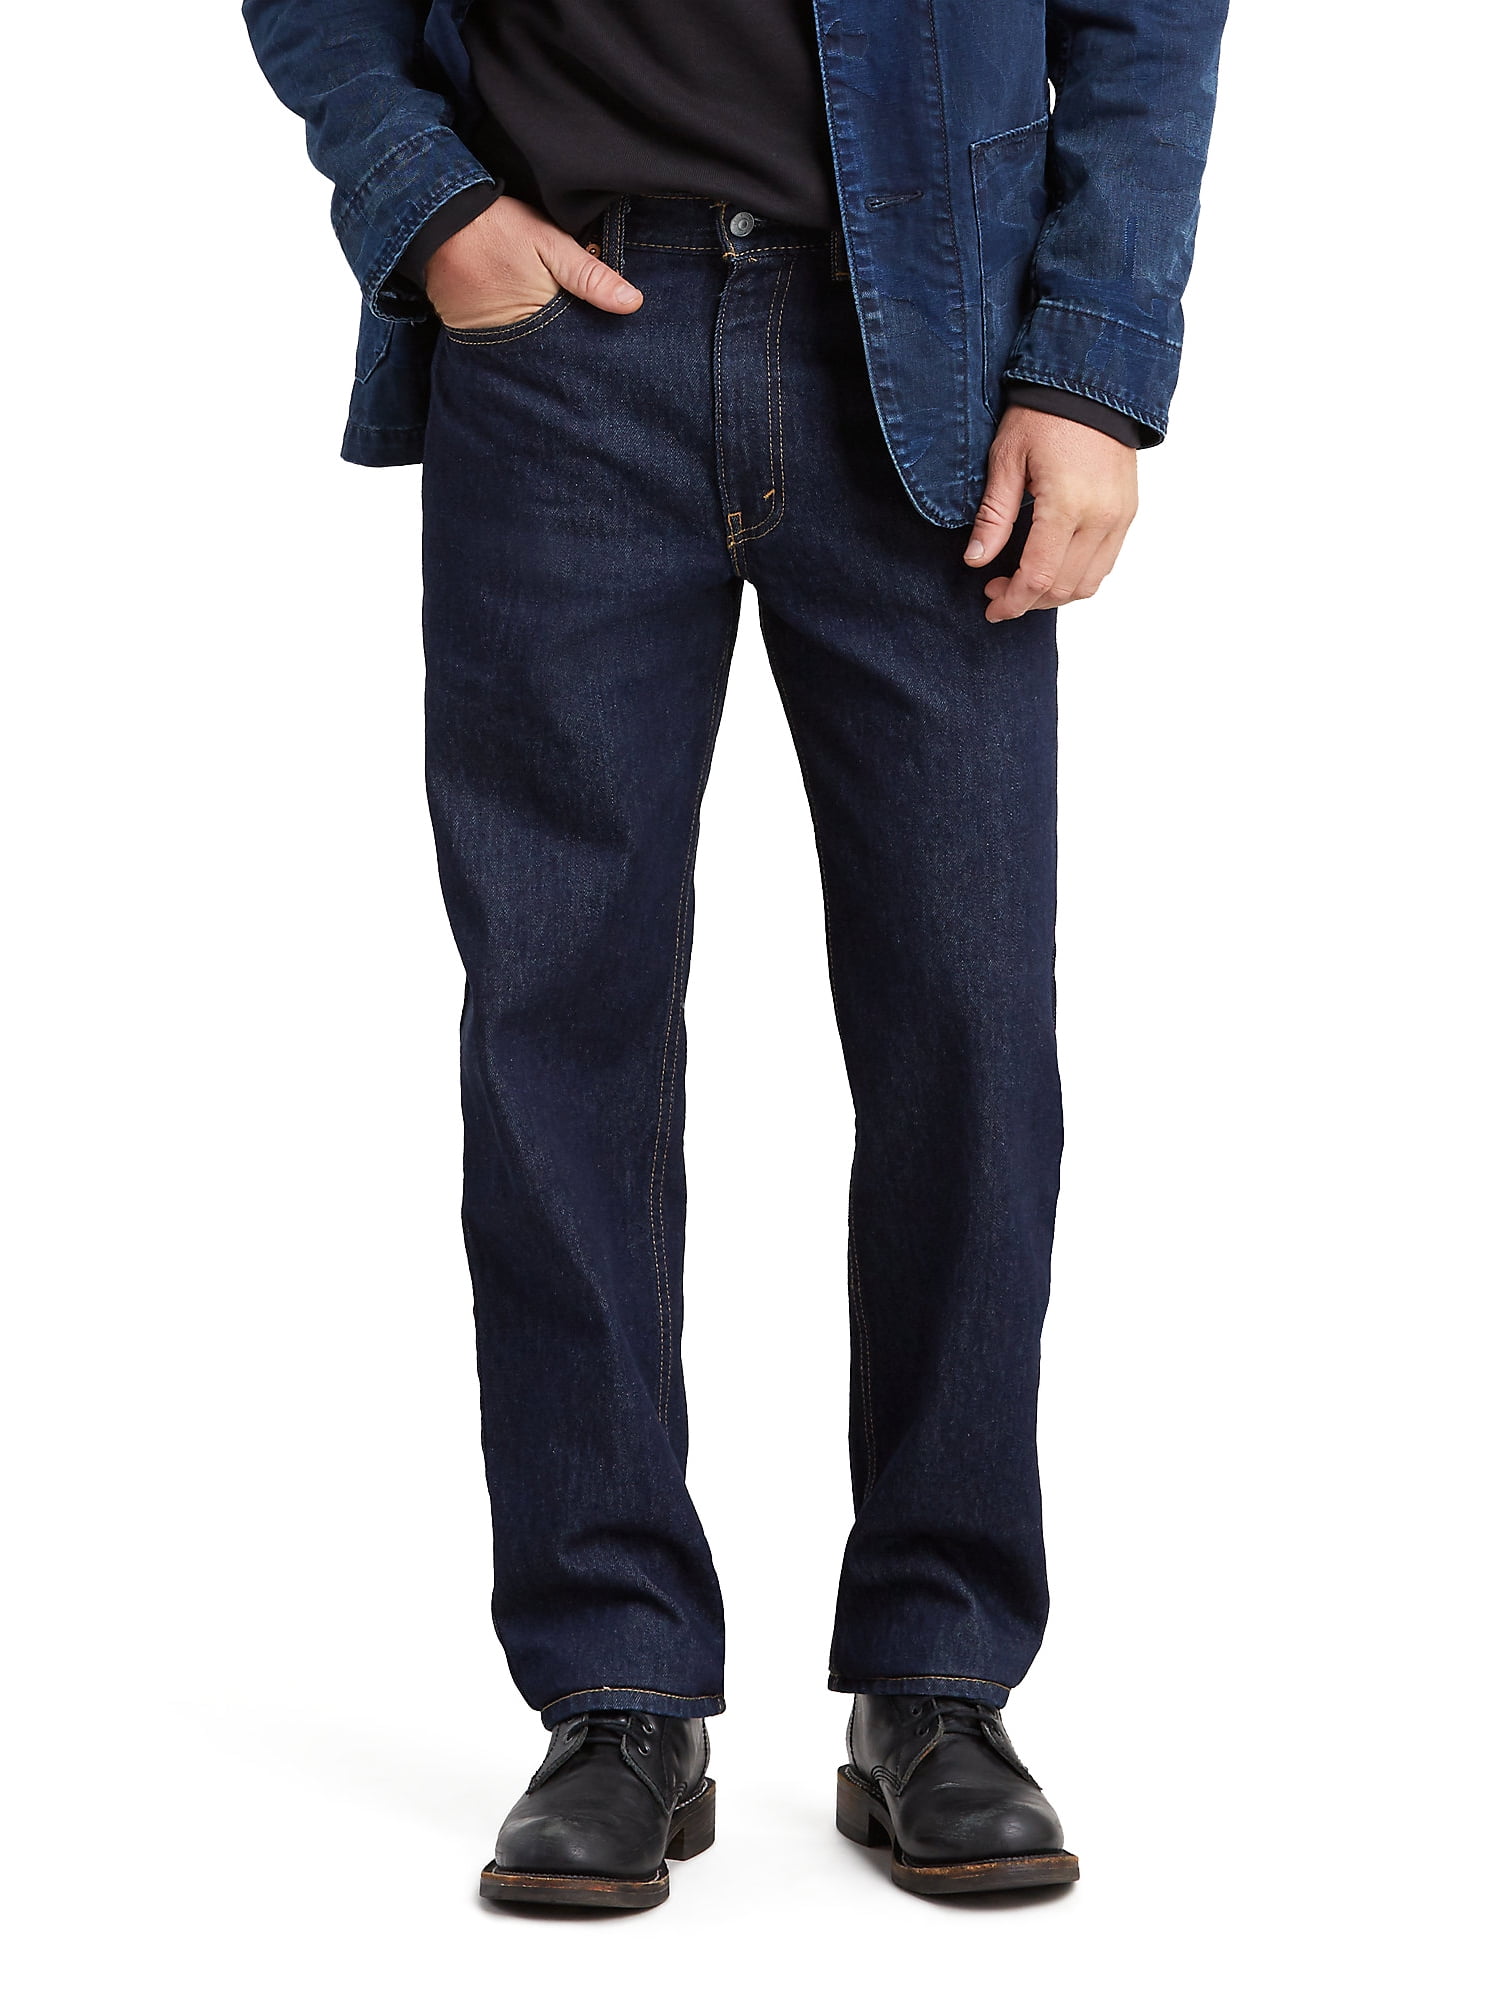 Levi's Men's 550 Relaxed Fit Jeans - Walmart.com